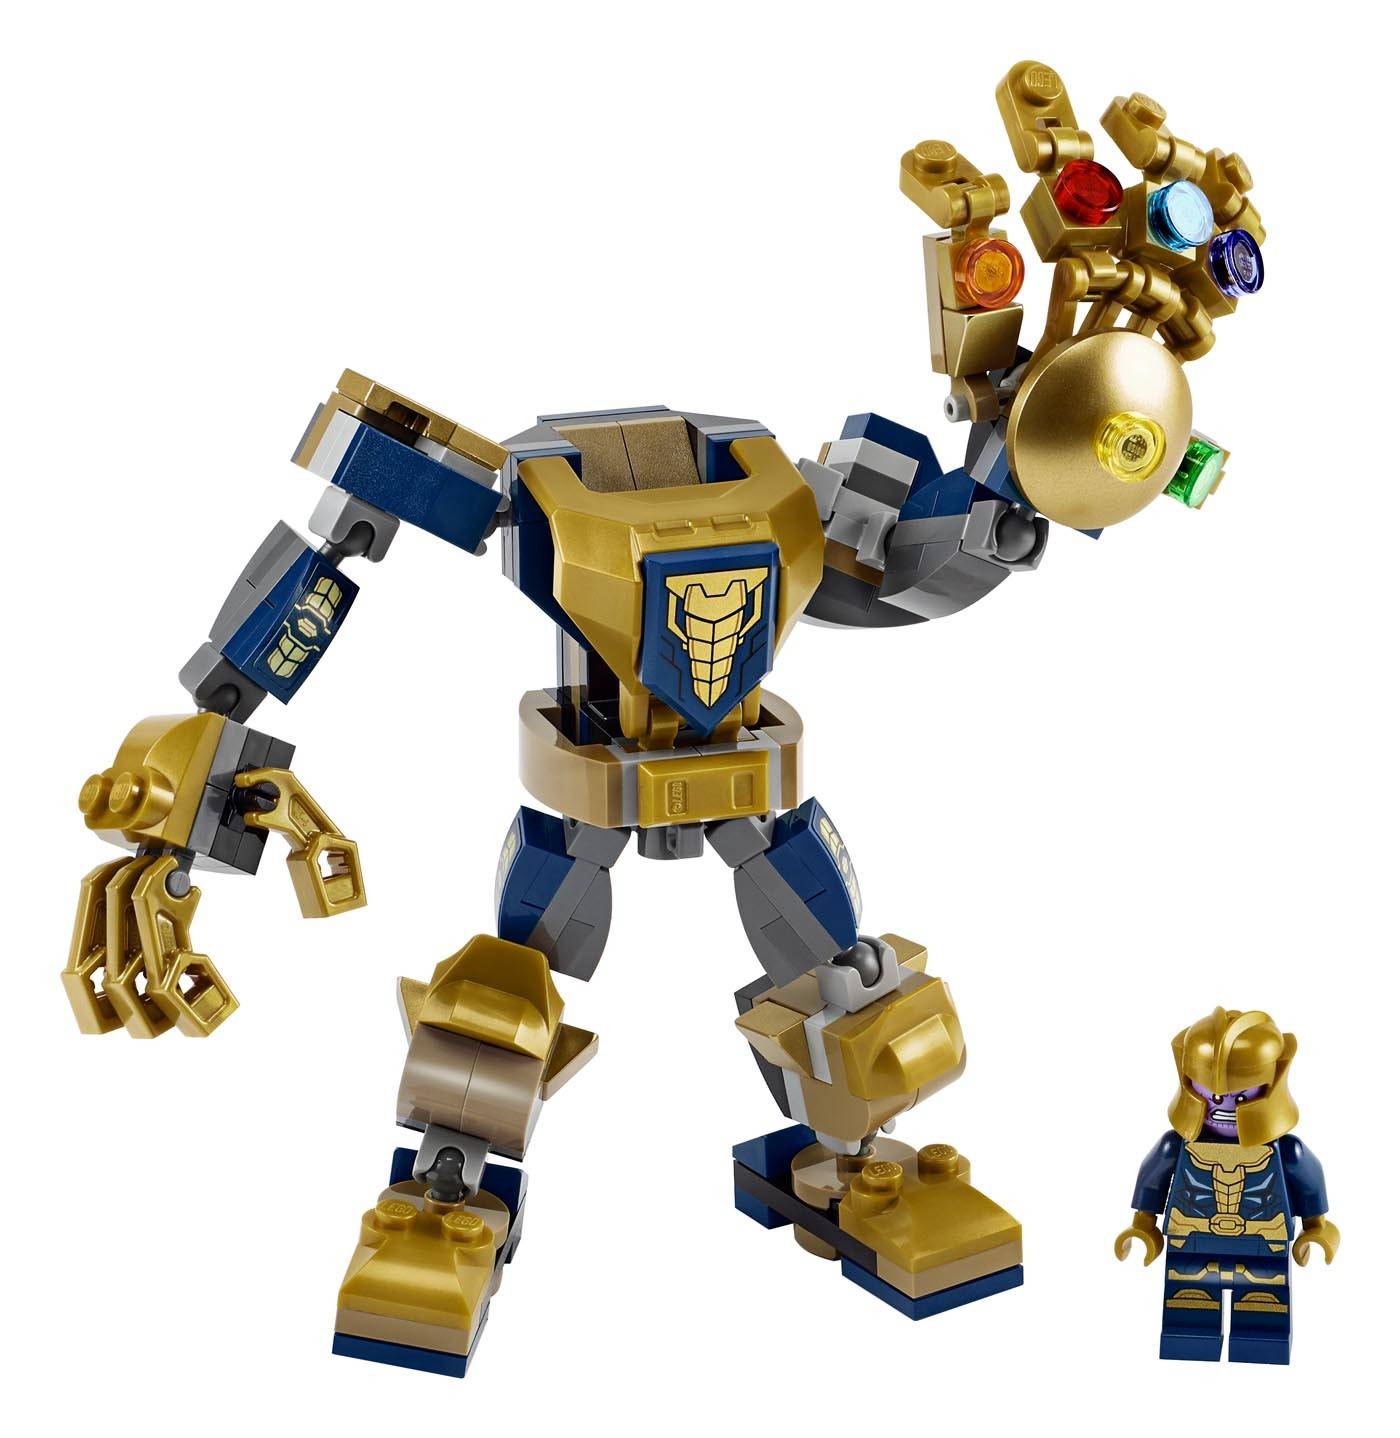 LEGO Super Heroes Mech Thanosa 76141